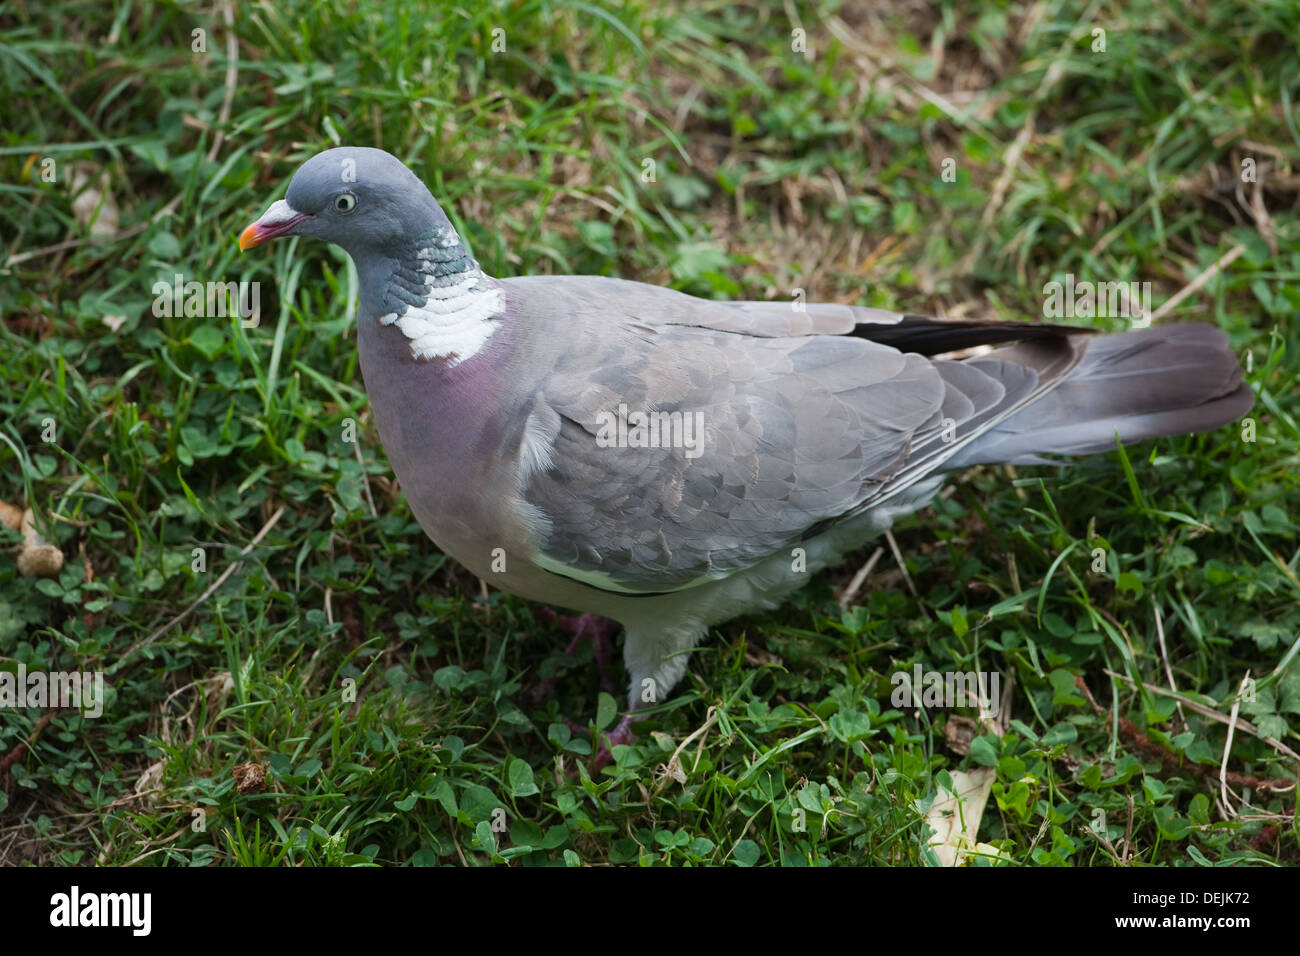 Woodpigeon or Ringed Dove (Columba palumbus). Scavenging on the ground. Stock Photo